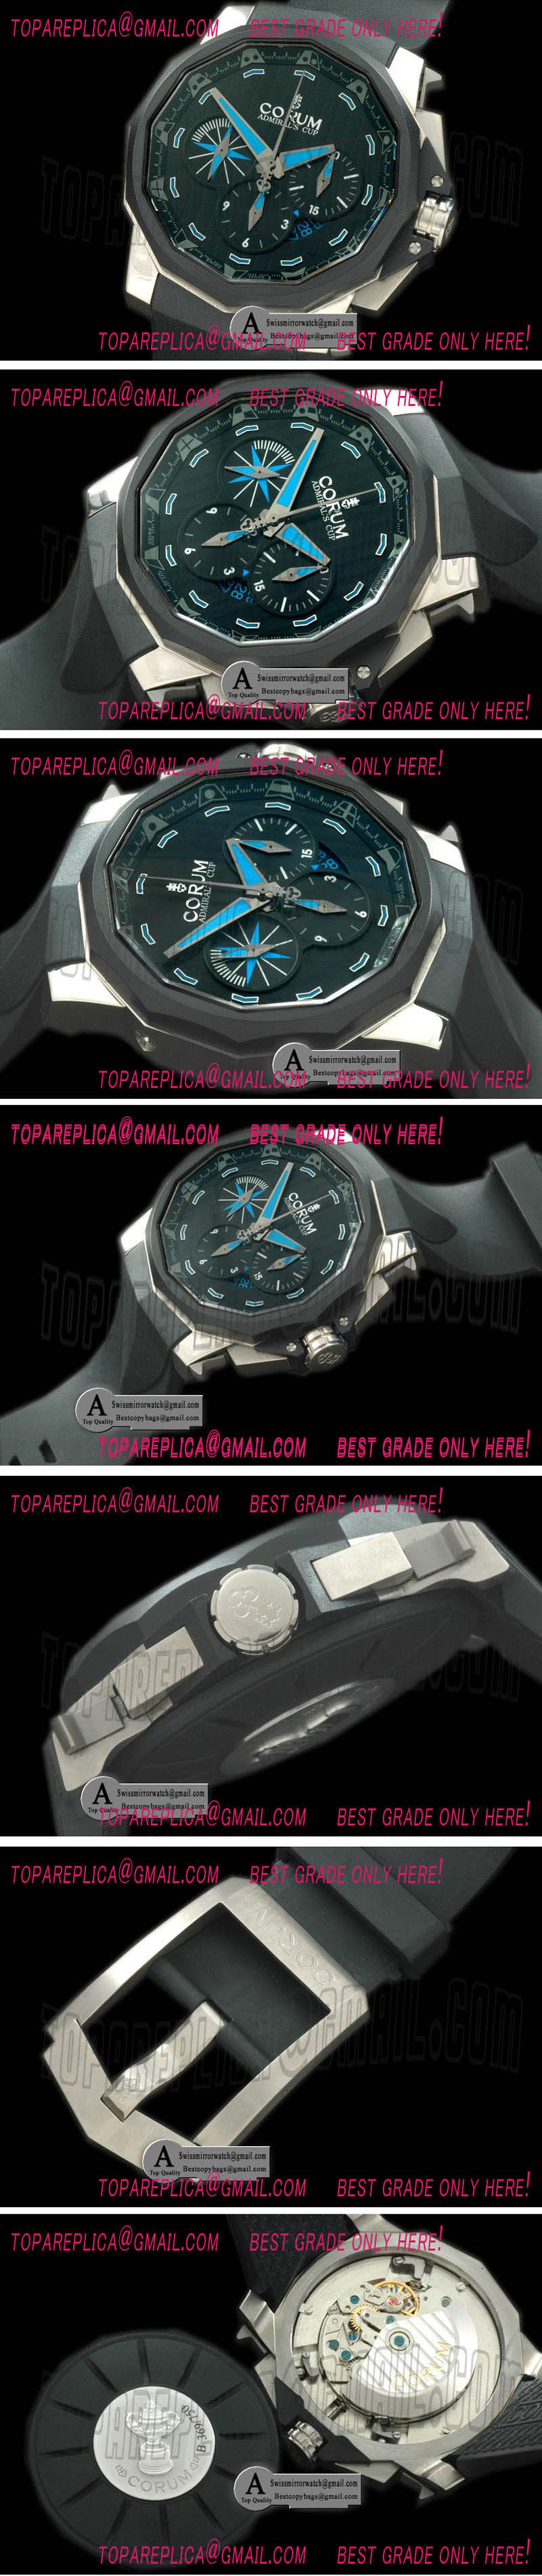 Corum Competition 48 Challenge Cup Titanium/Rubber Black Asia 7753 ULT Replica Watches